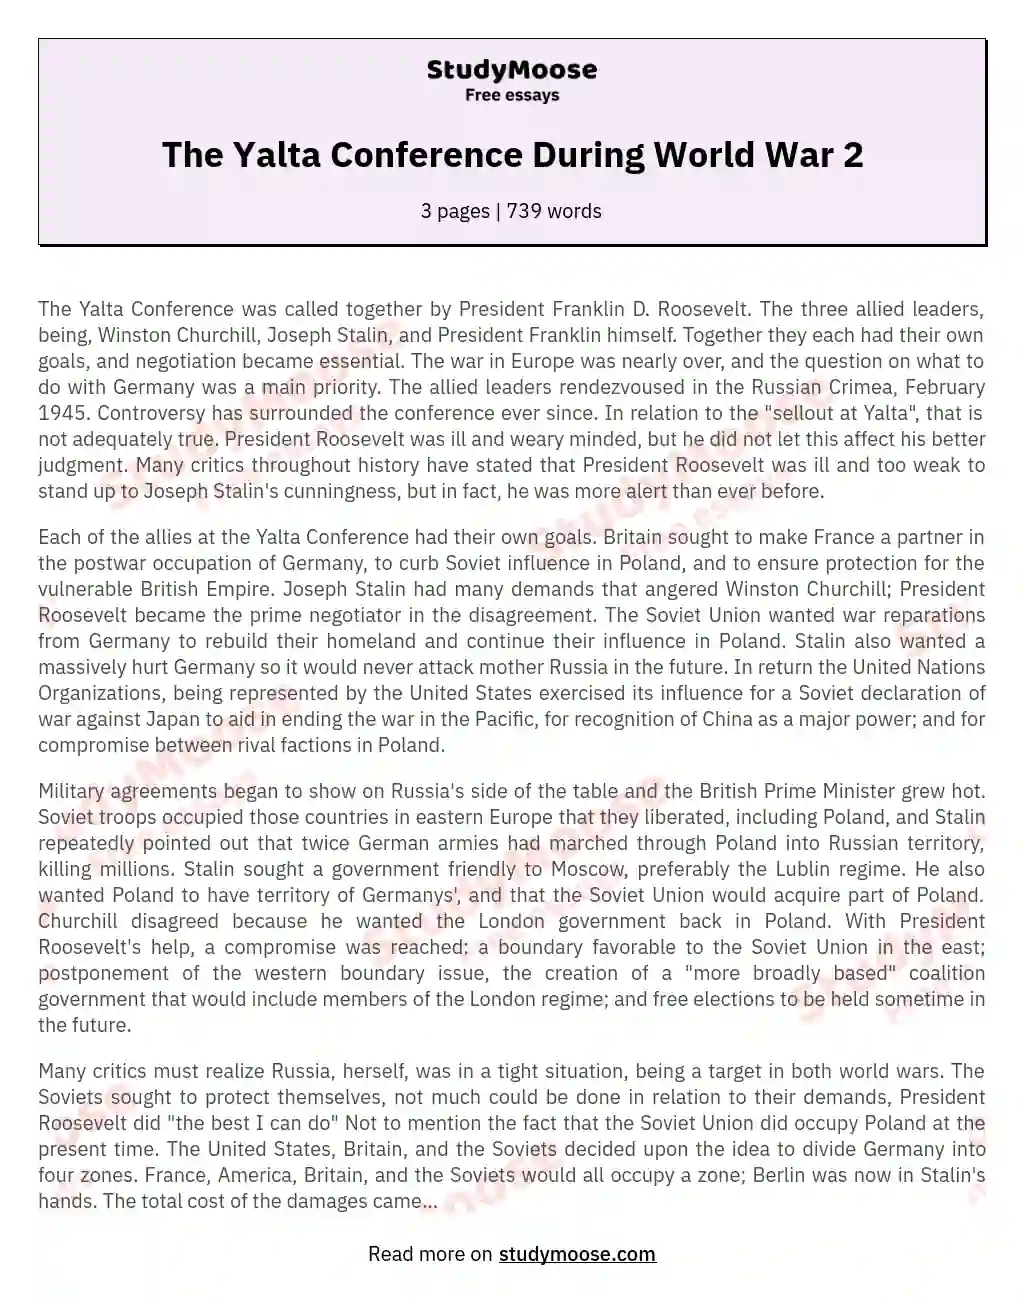 world war 2 essay topic